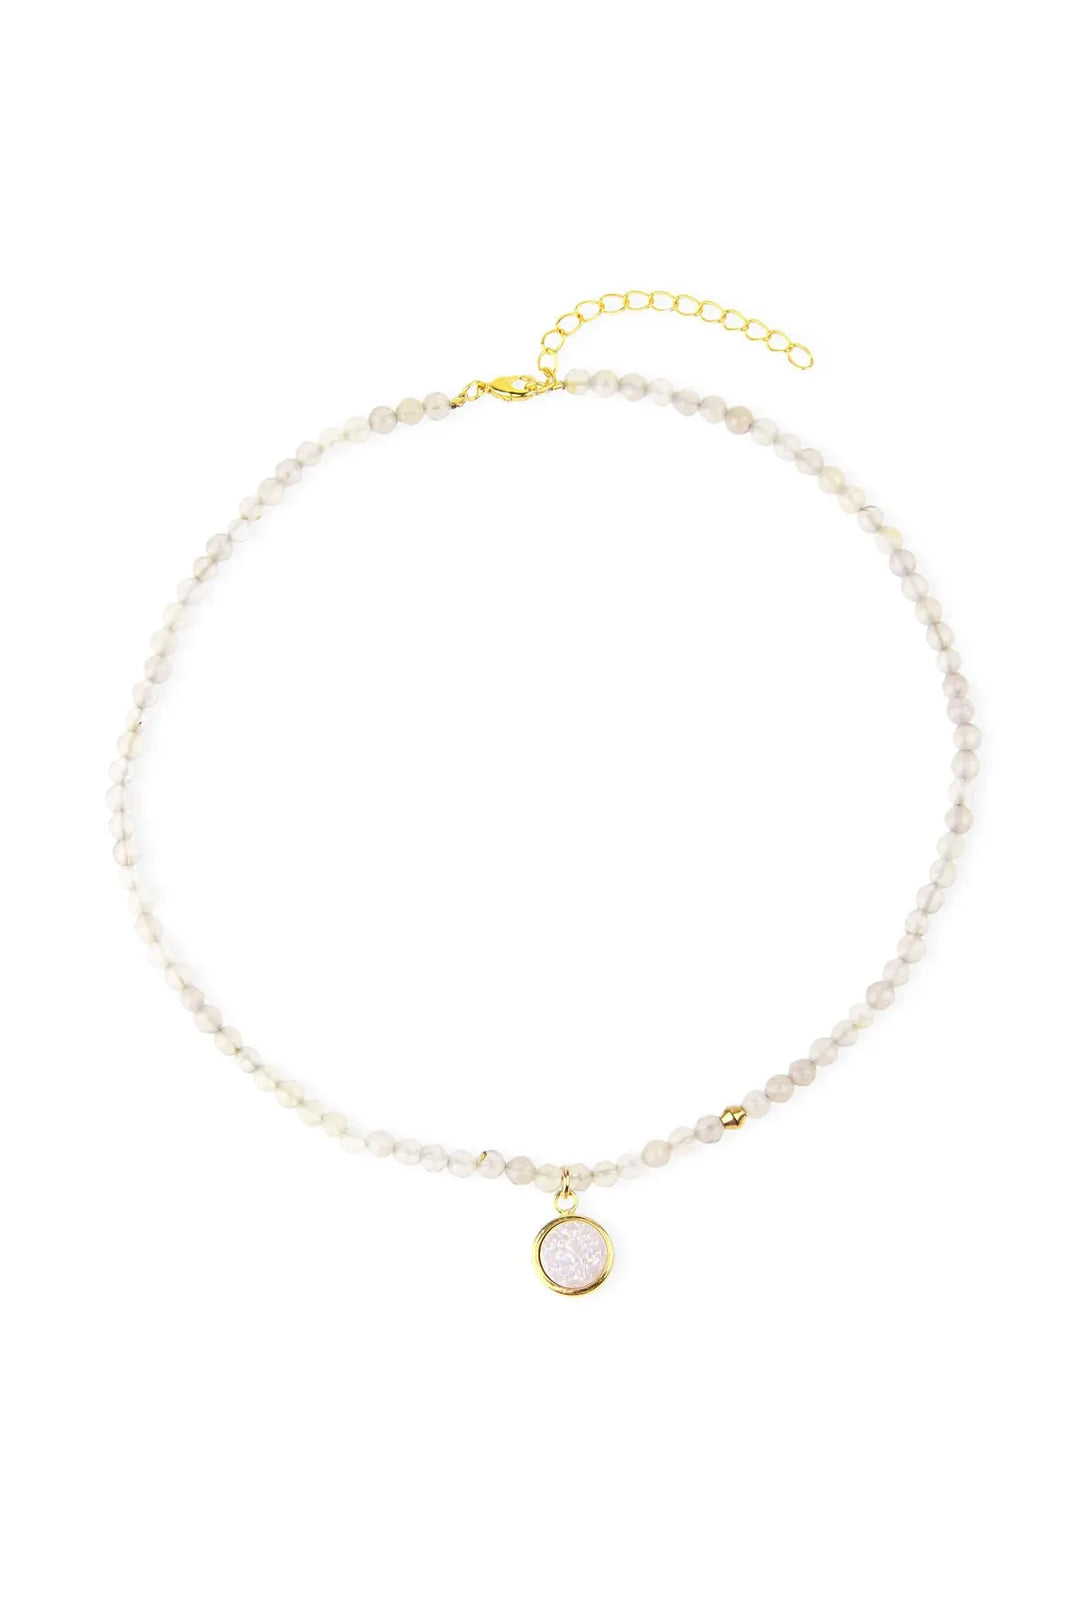 Agate Gemstone Beads Necklace with Druzy Pendant Papaya Whip